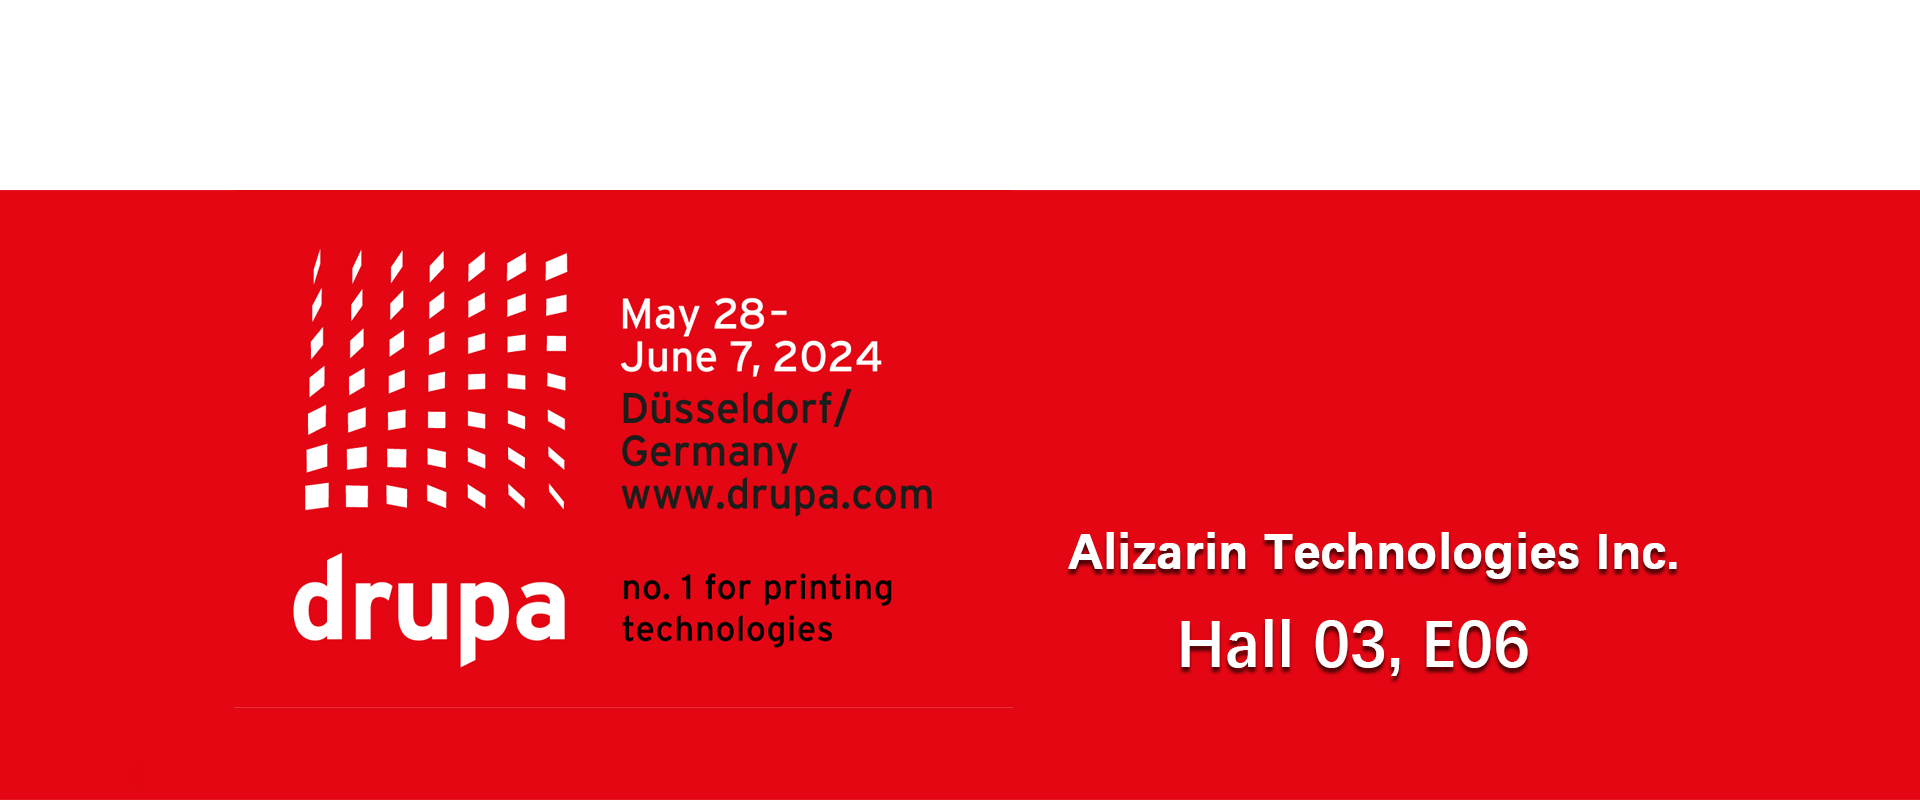 Drupa 2024 i Düsseldorf Tyskland, alizarin technologys monter är Hall 03, E06